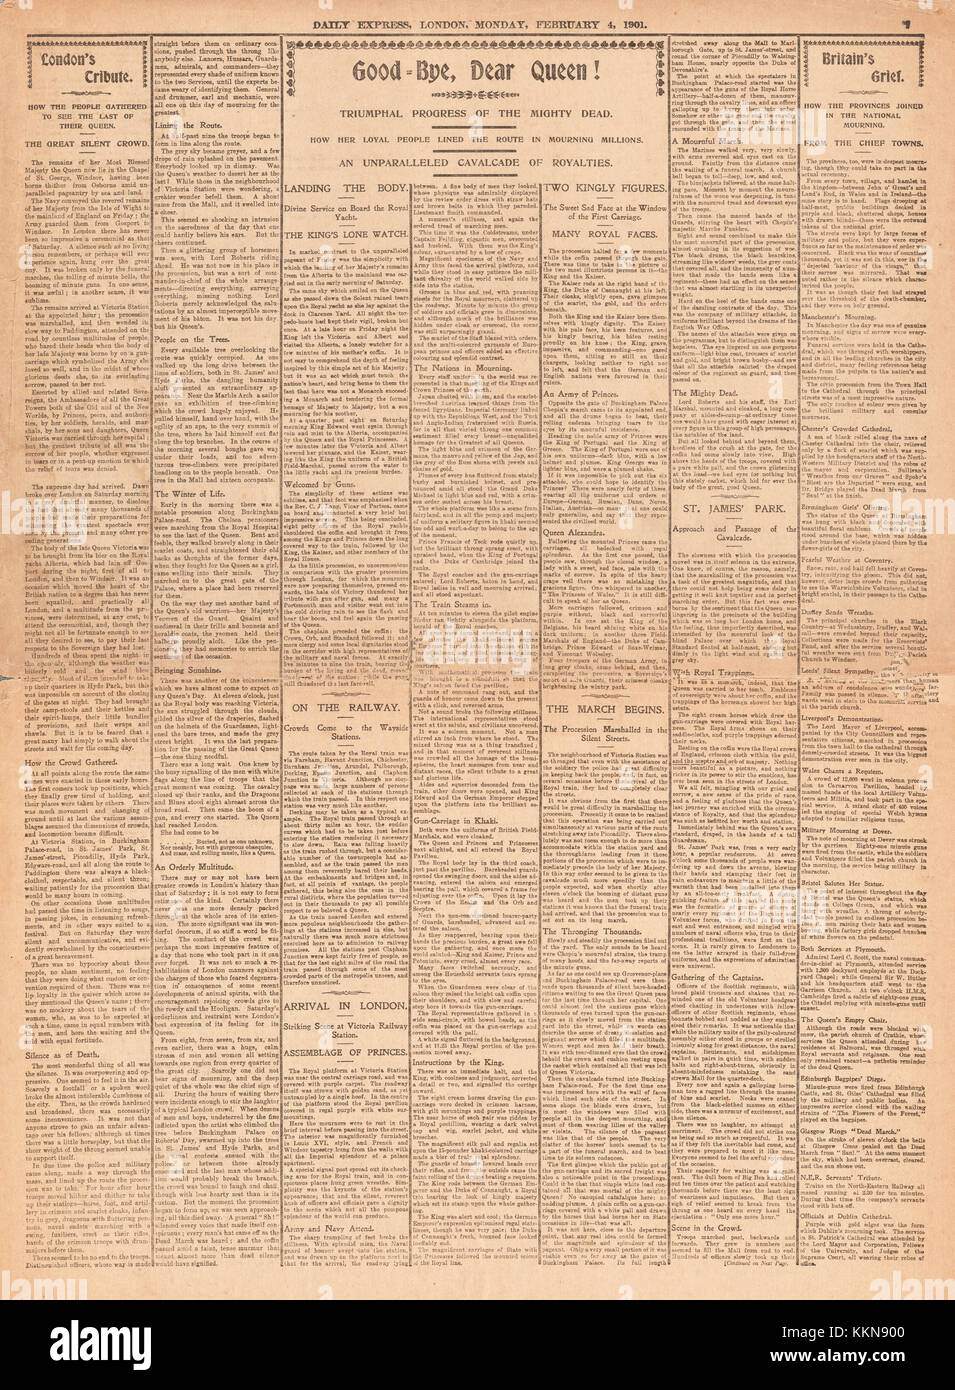 Daily Express 1901 la muerte de la Reina Victoria, página 7 Foto de stock